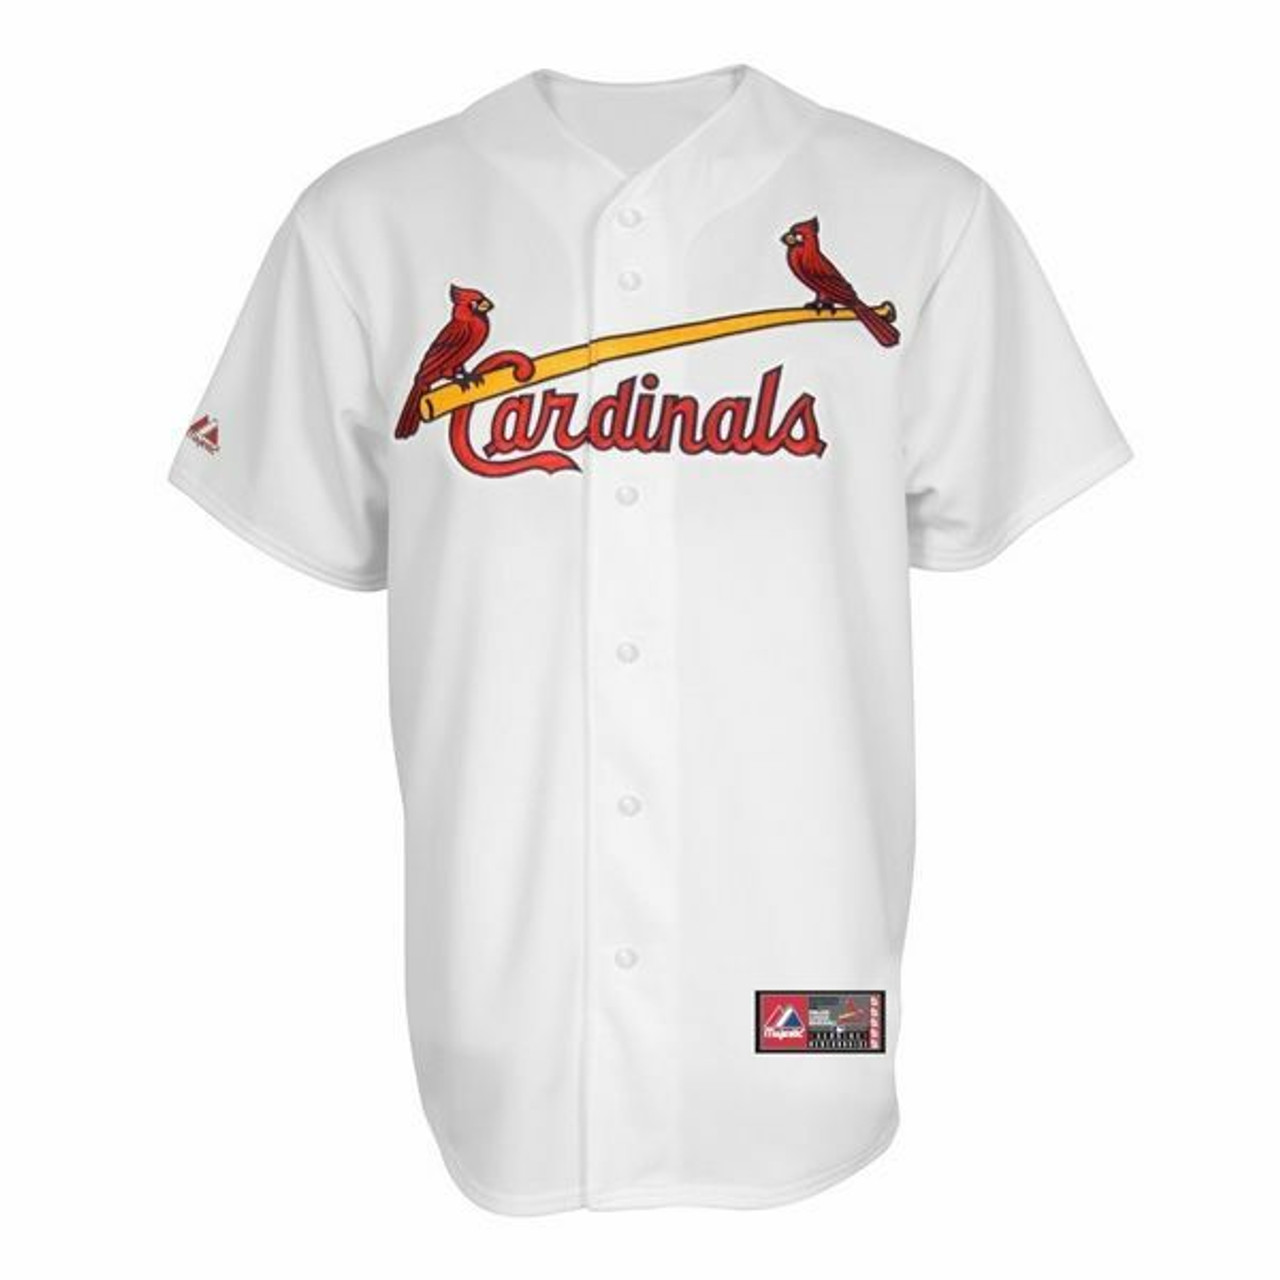 St Louis Cardinals Hawaiian Shirt Toucan Pineapple St Louis Cardinals Gift  - Personalized Gifts: Family, Sports, Occasions, Trending